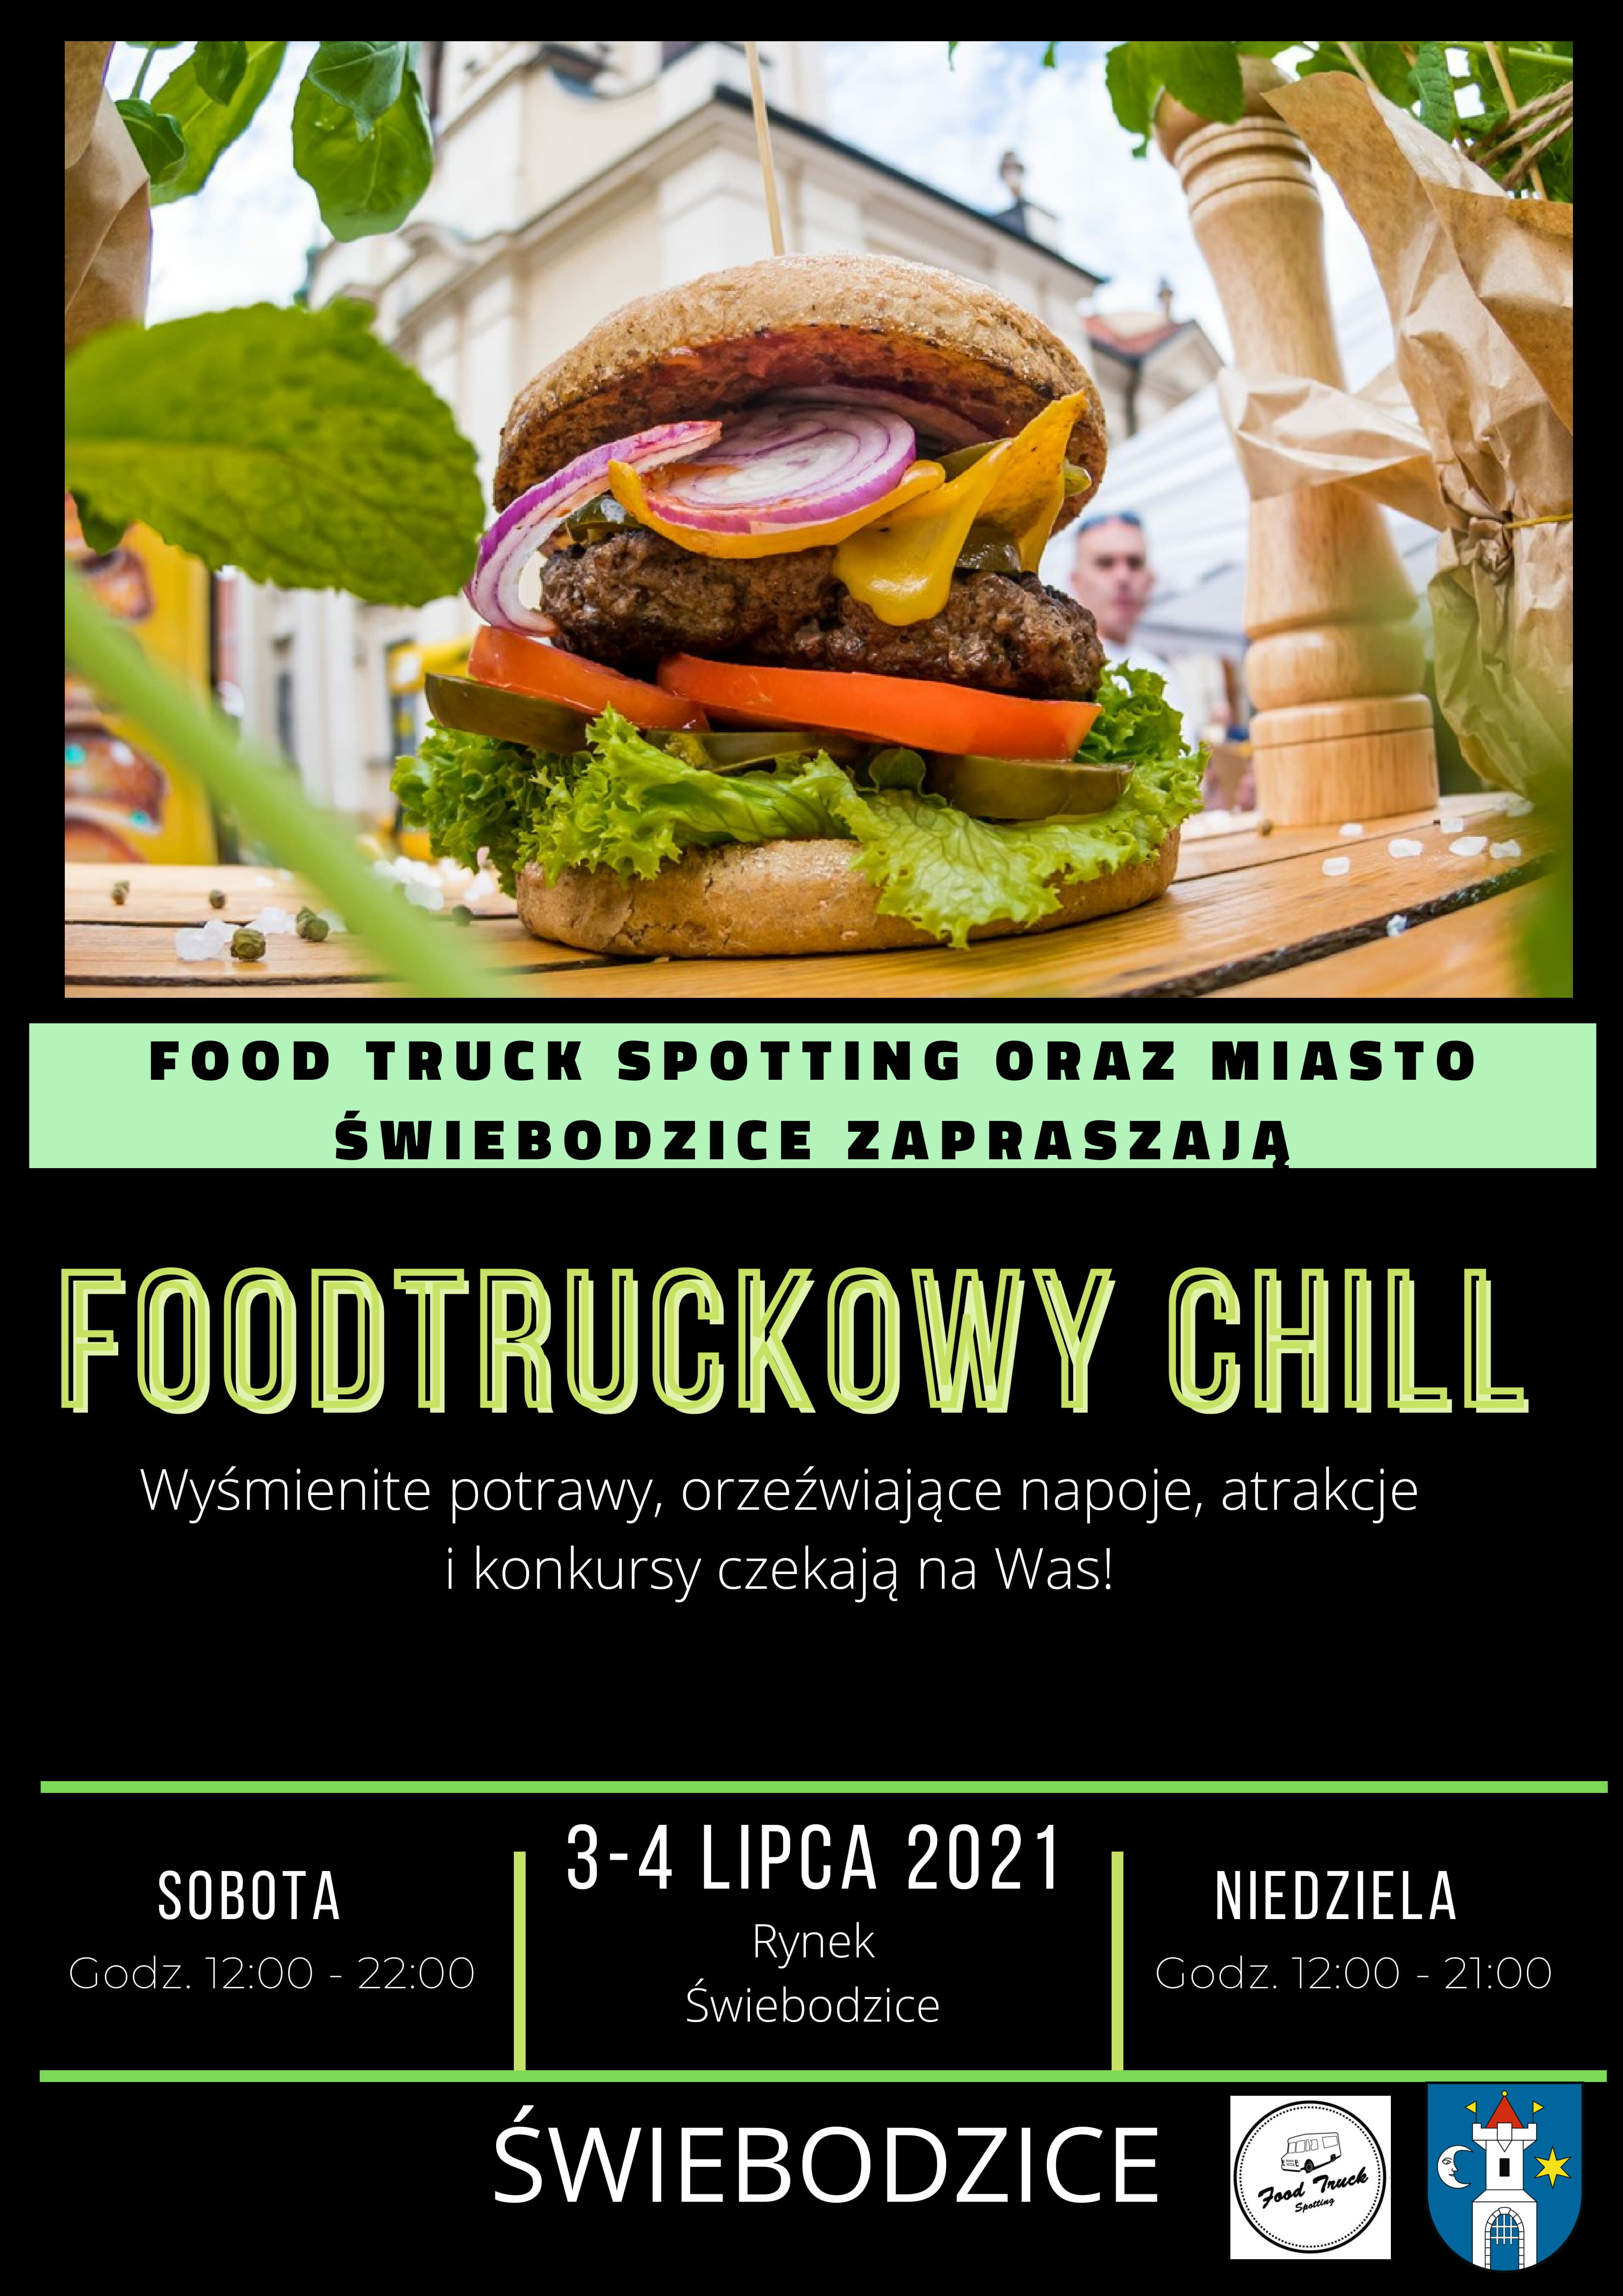 Plakat promujący Foodtruckowy Chill